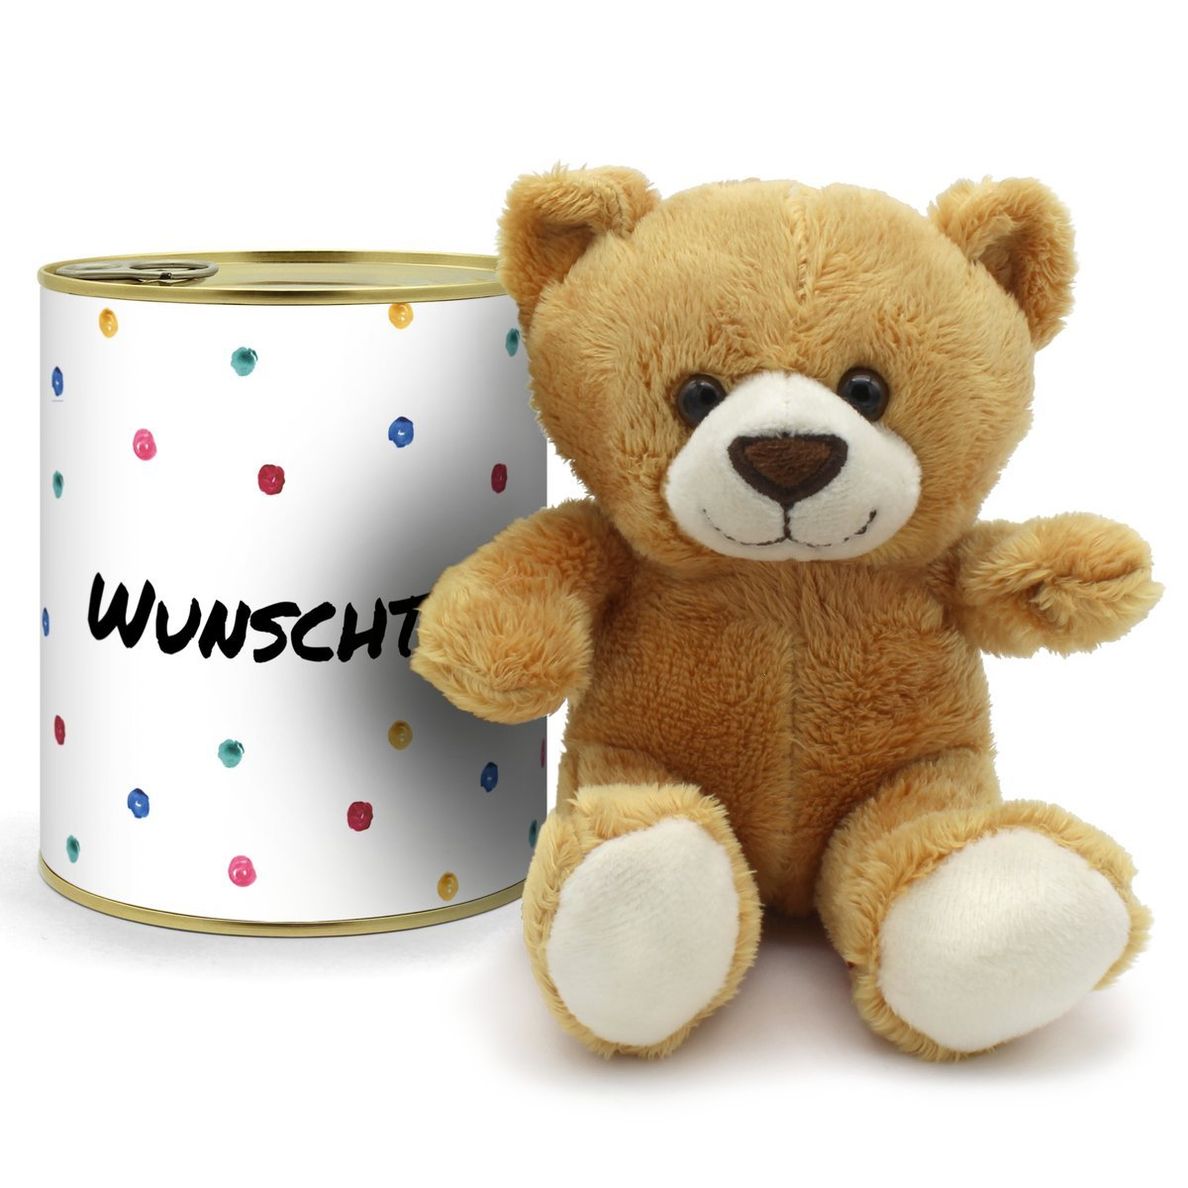 Personalisierte Geschenkdose - Teddybär Motiv: Farbkleckse | Weltbild.de